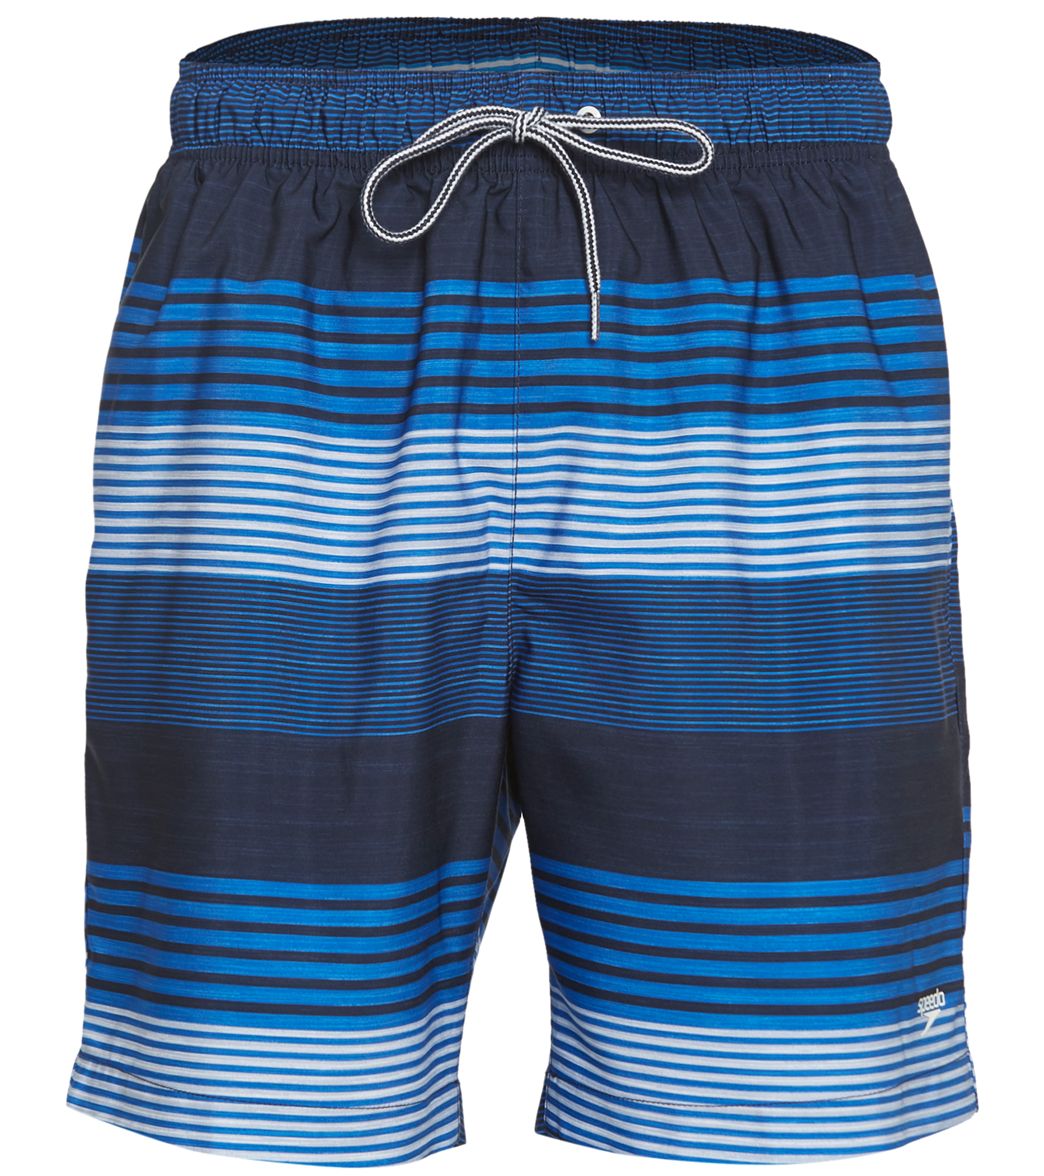 Speedo Men's 18 Active Latitude Stripe Redondo Volley Short - Blue Lemonade Small Polyester - Swimoutlet.com